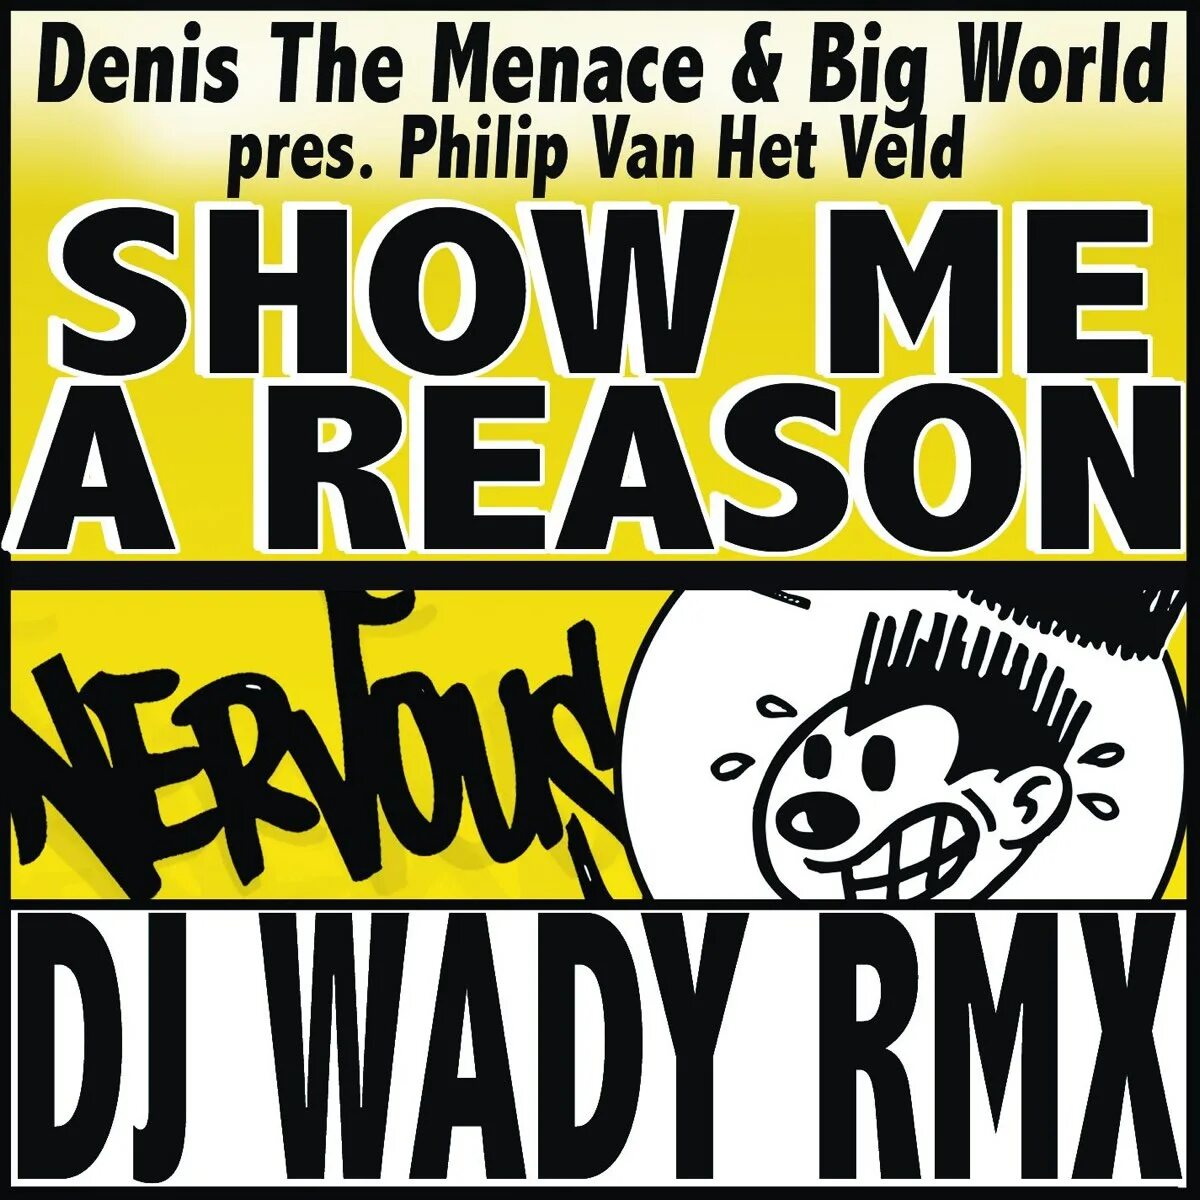 Denis the Menace - show me a reason. Denis the Menace & big World presents Philipp van het veld. Playlist show. Denis the Menace show me a reason Terrace Mix.